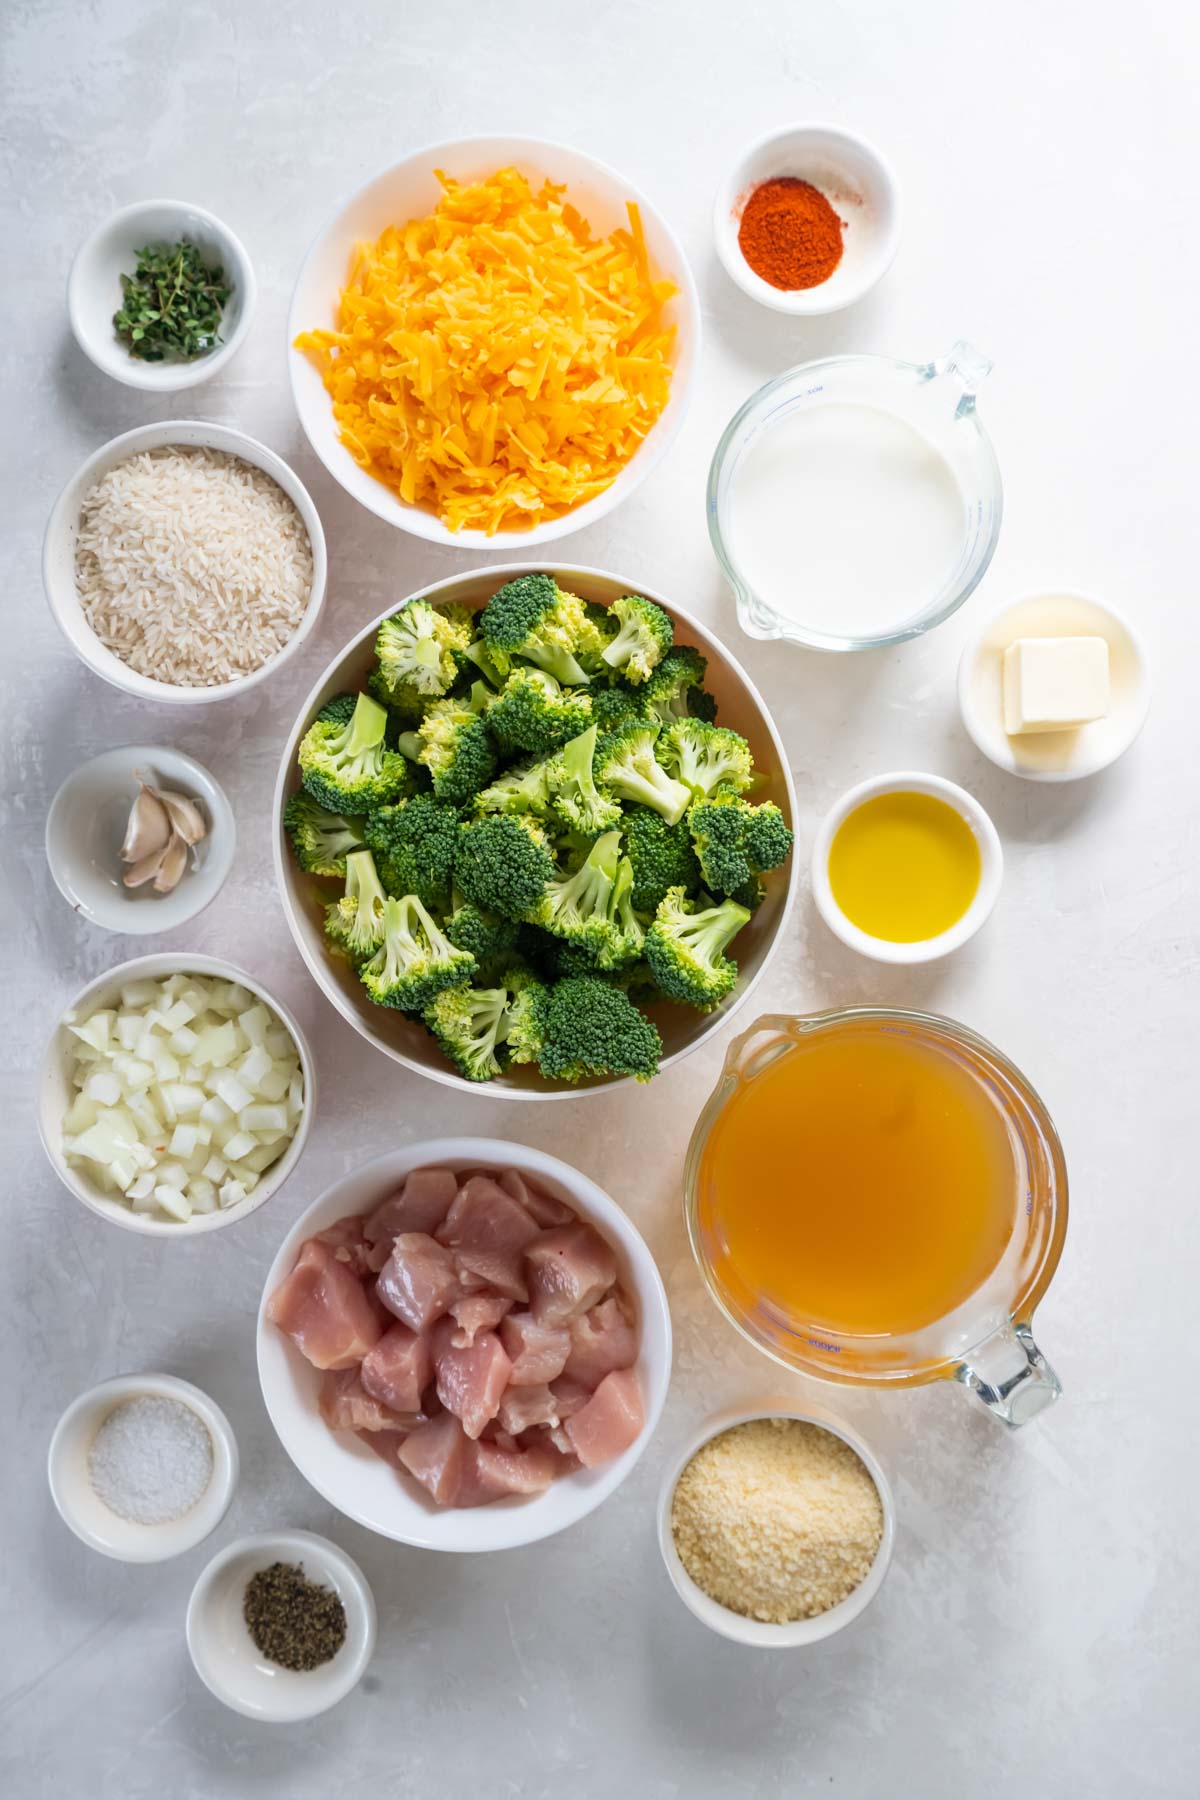 Ingredients for chicken broccoli rice casserole recipe.